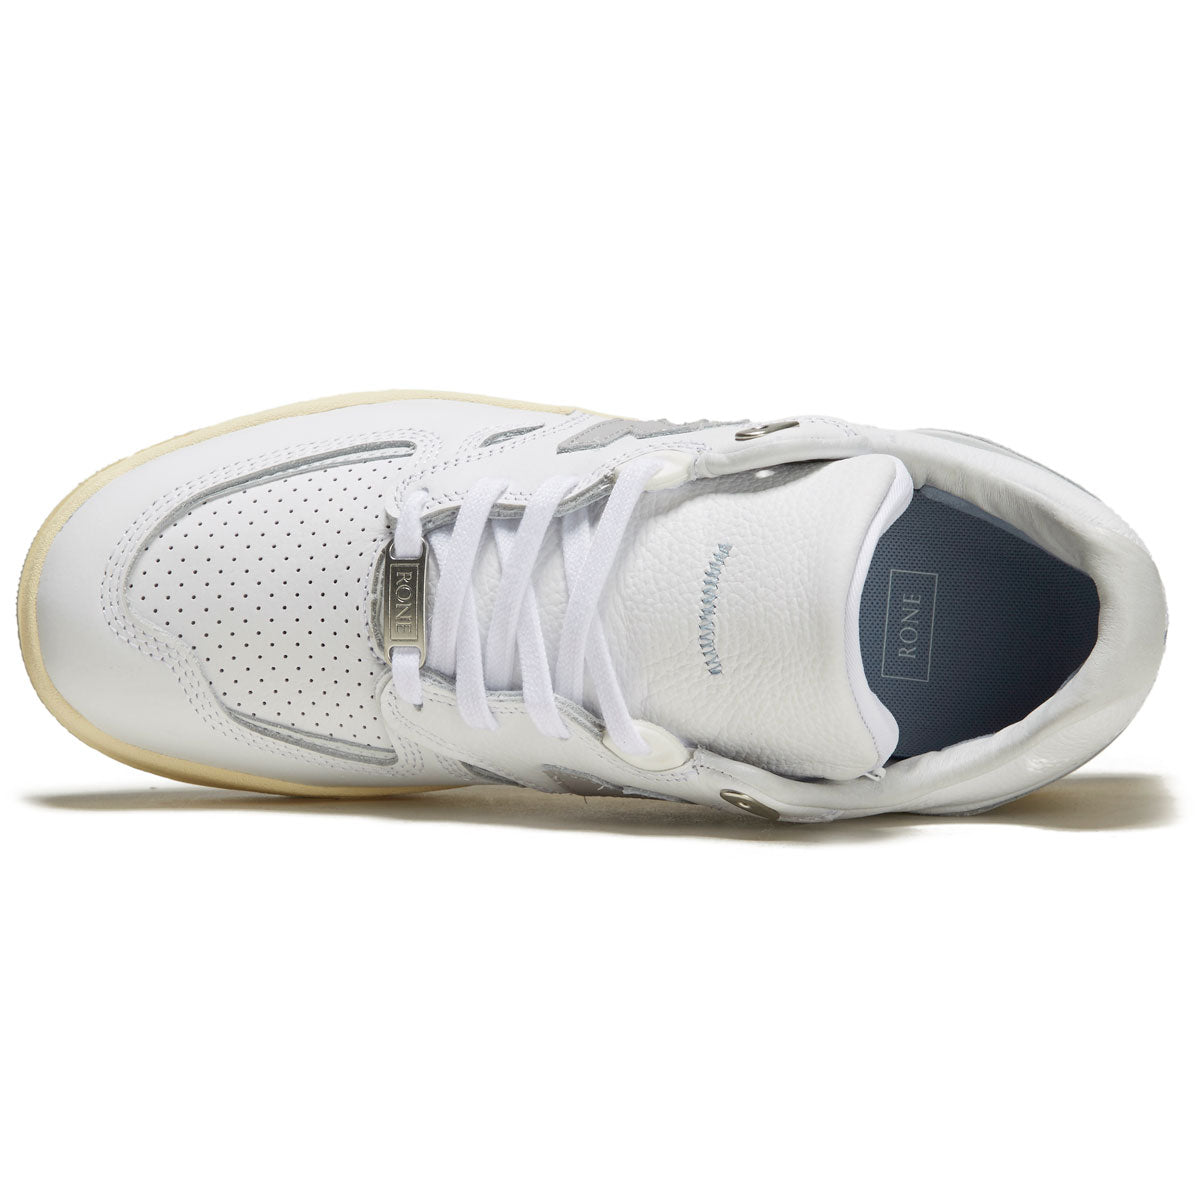 New Balance 1010 Tiago x Rone Shoes - White image 3